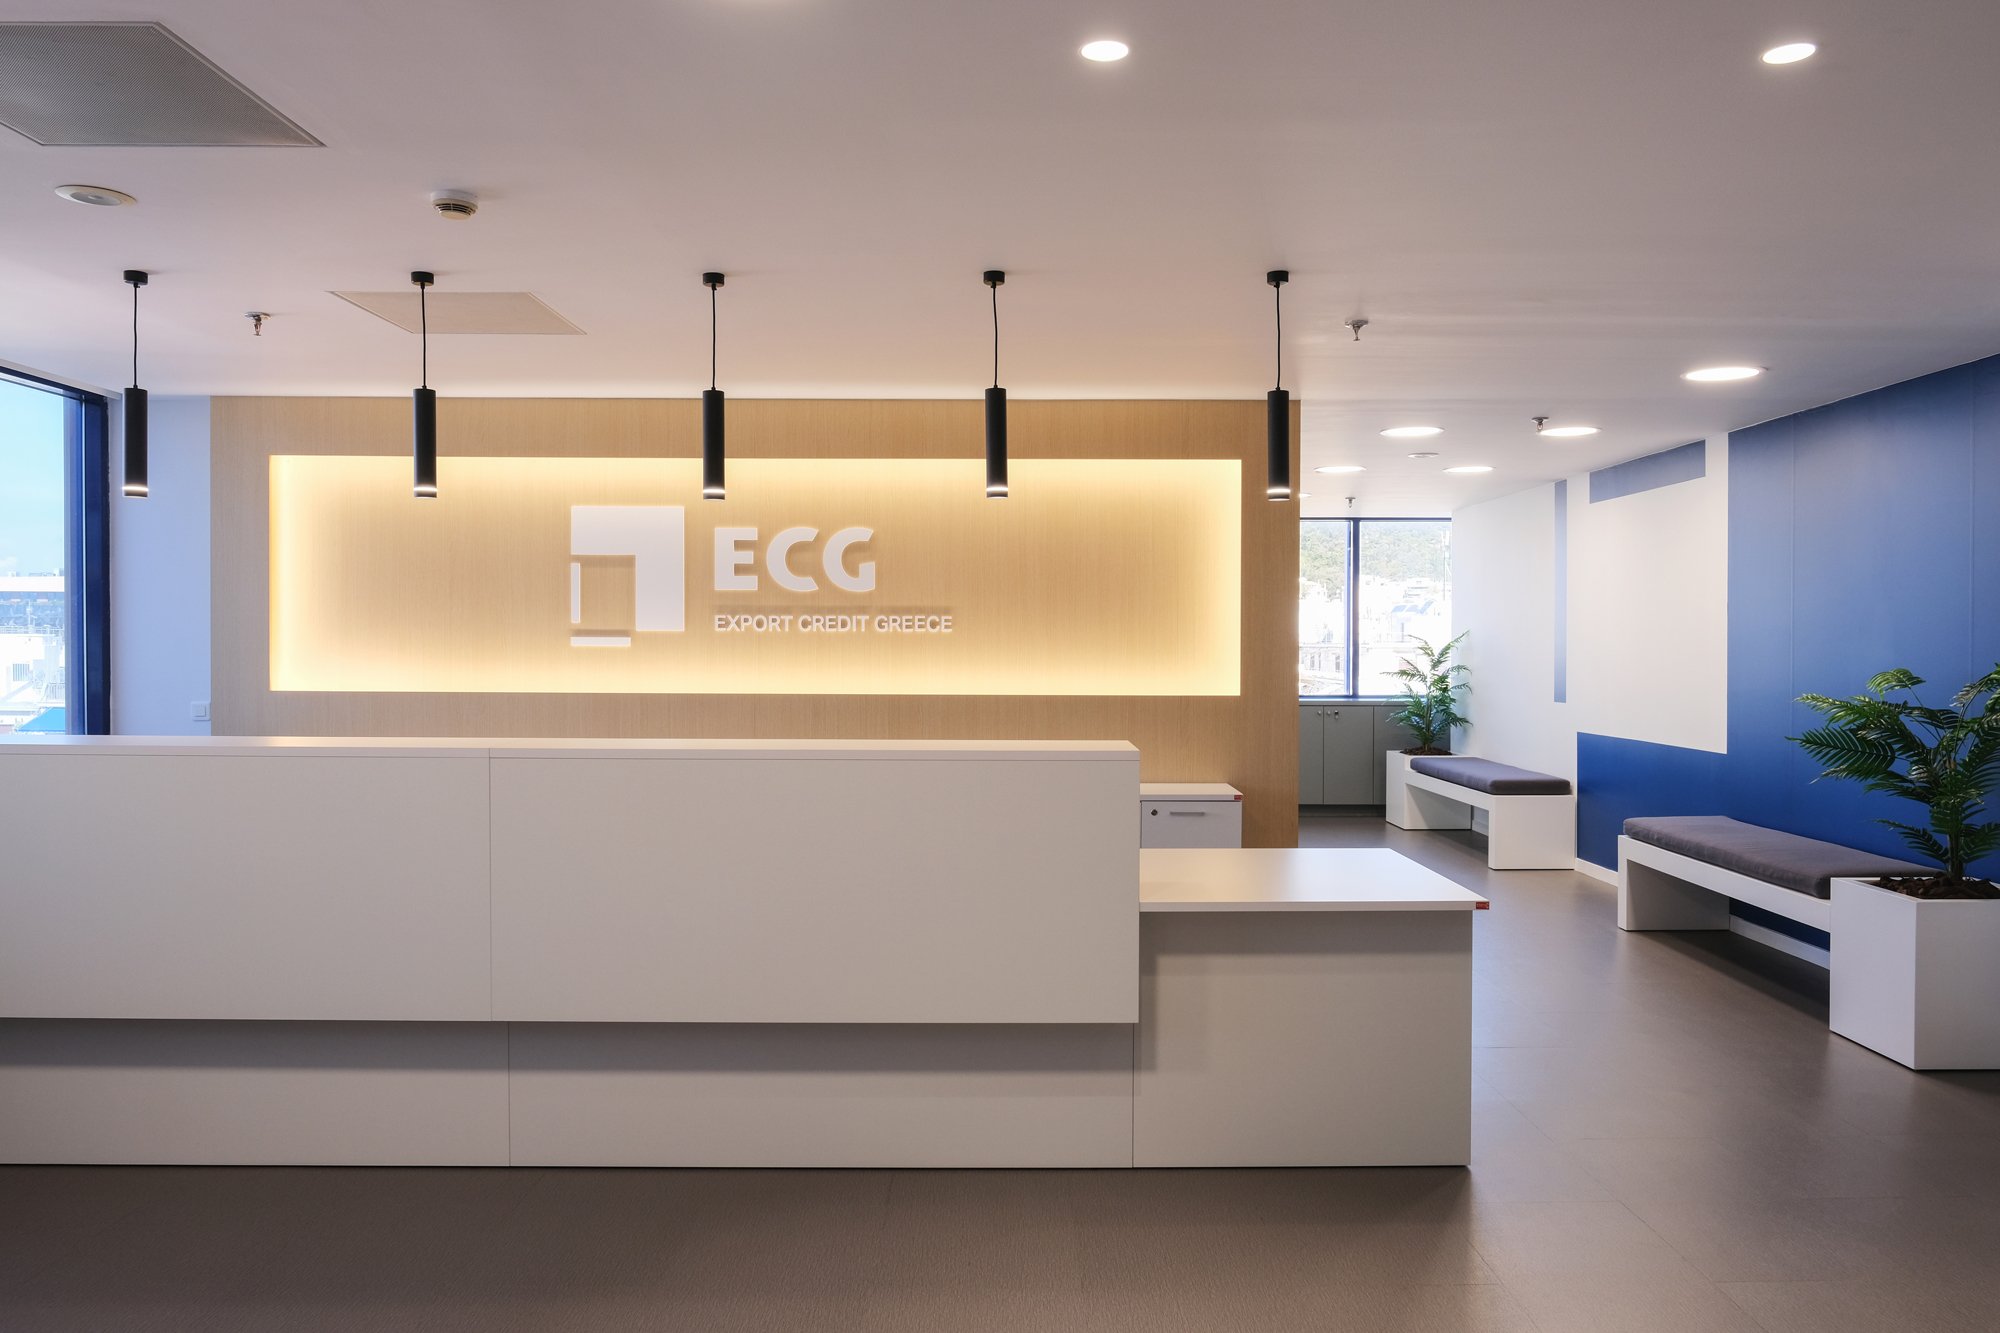  ECG Offices,  Aplusm Architects  